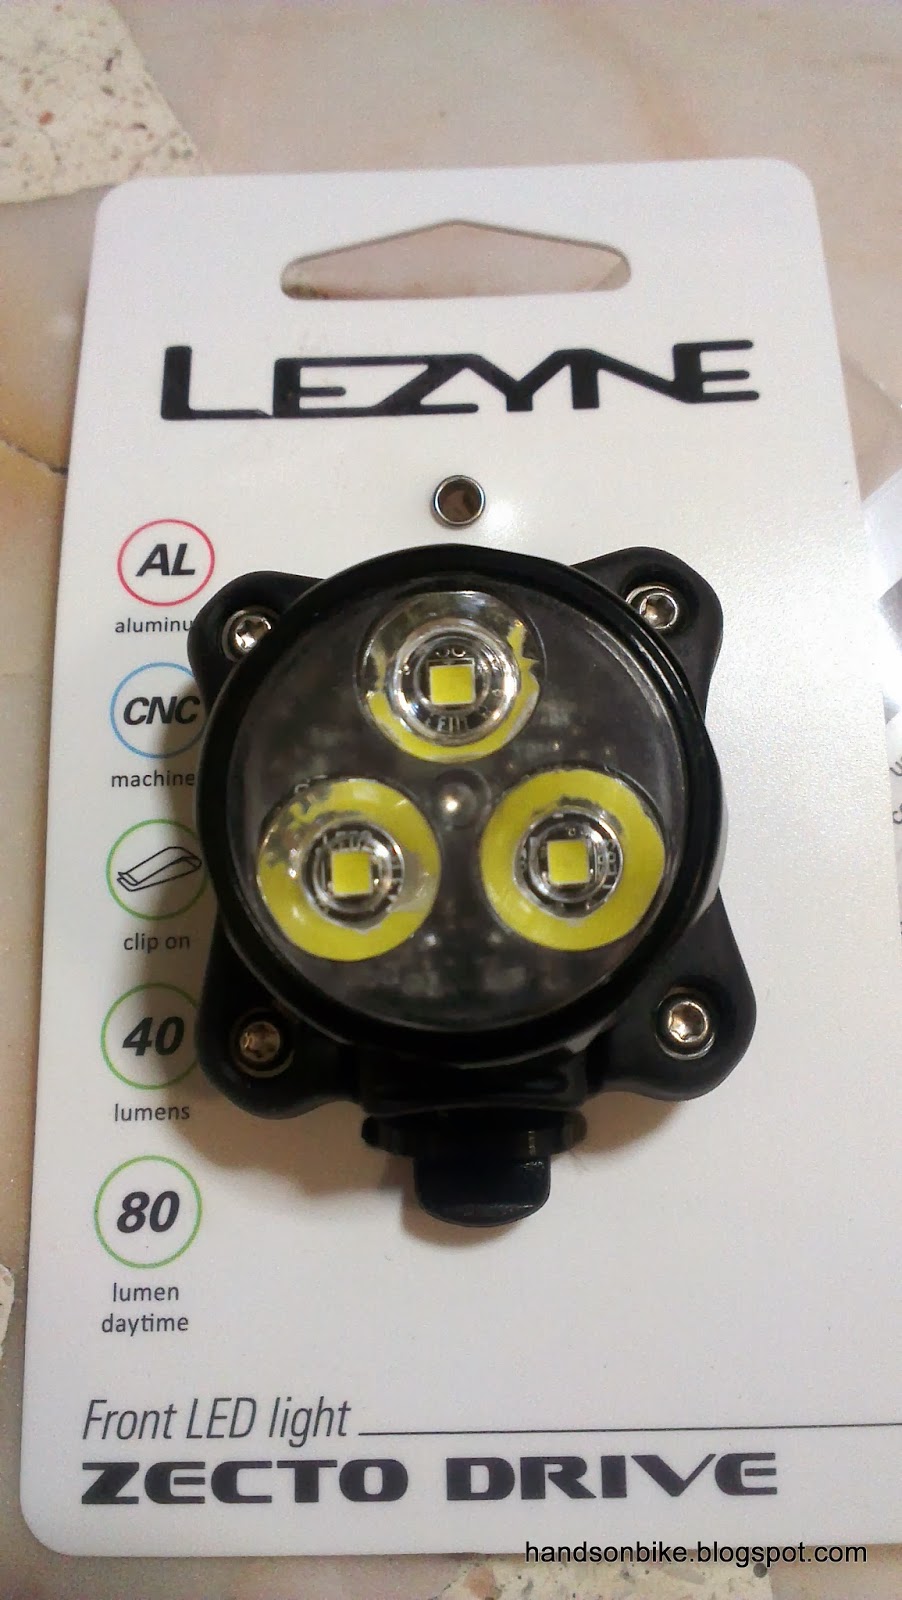 Hands On Bike: Lezyne Zecto Drive Front LED Light